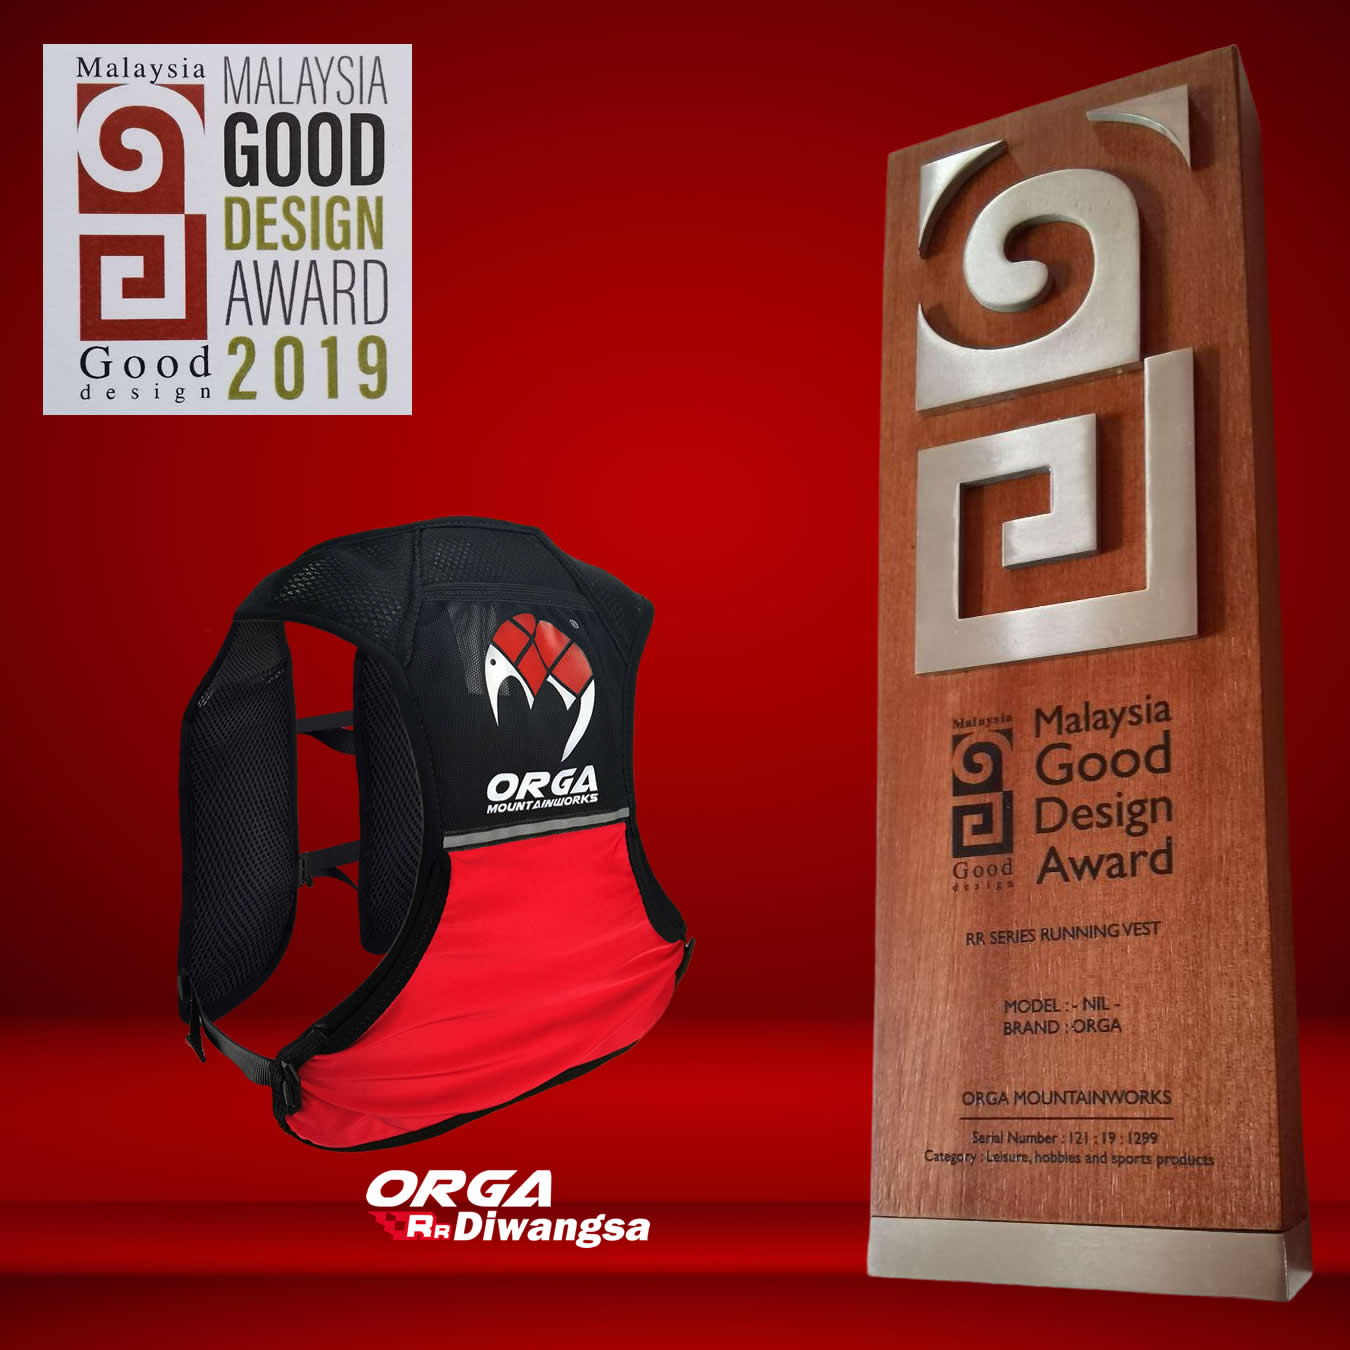 Orga Malaysia Good Design Award 2019